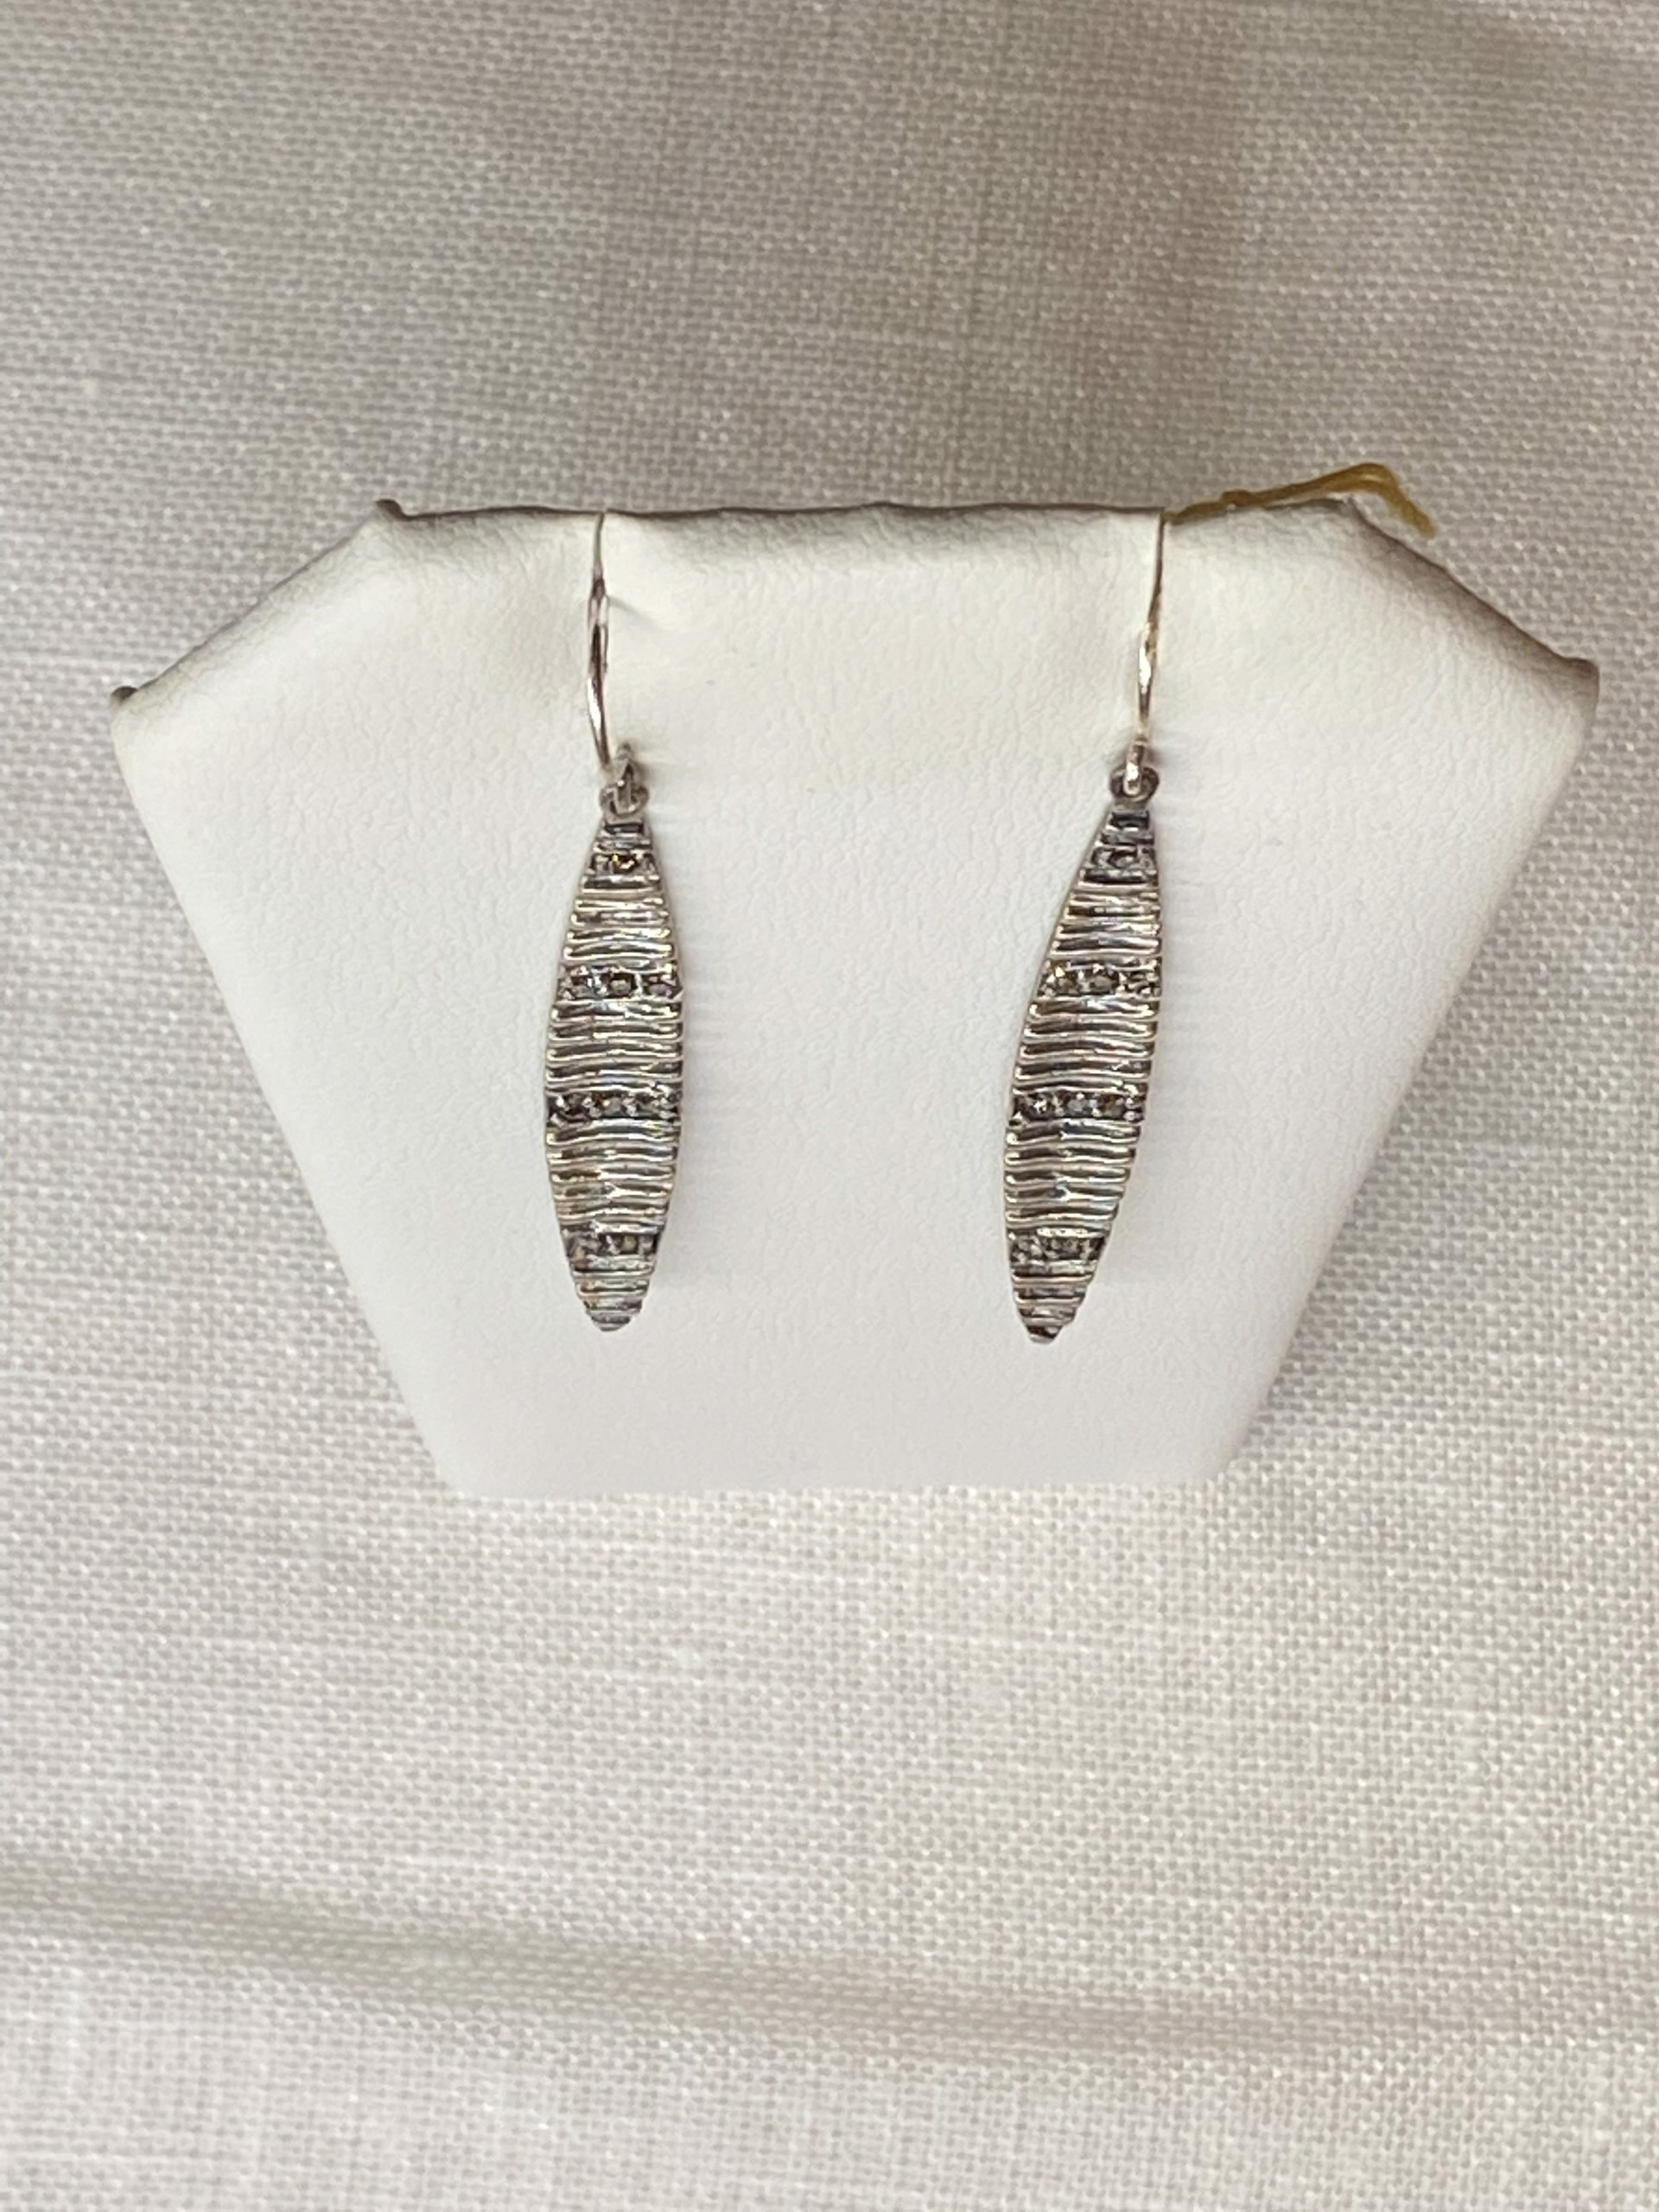 Faceted diamond drop earrings by Jeri Mitrani